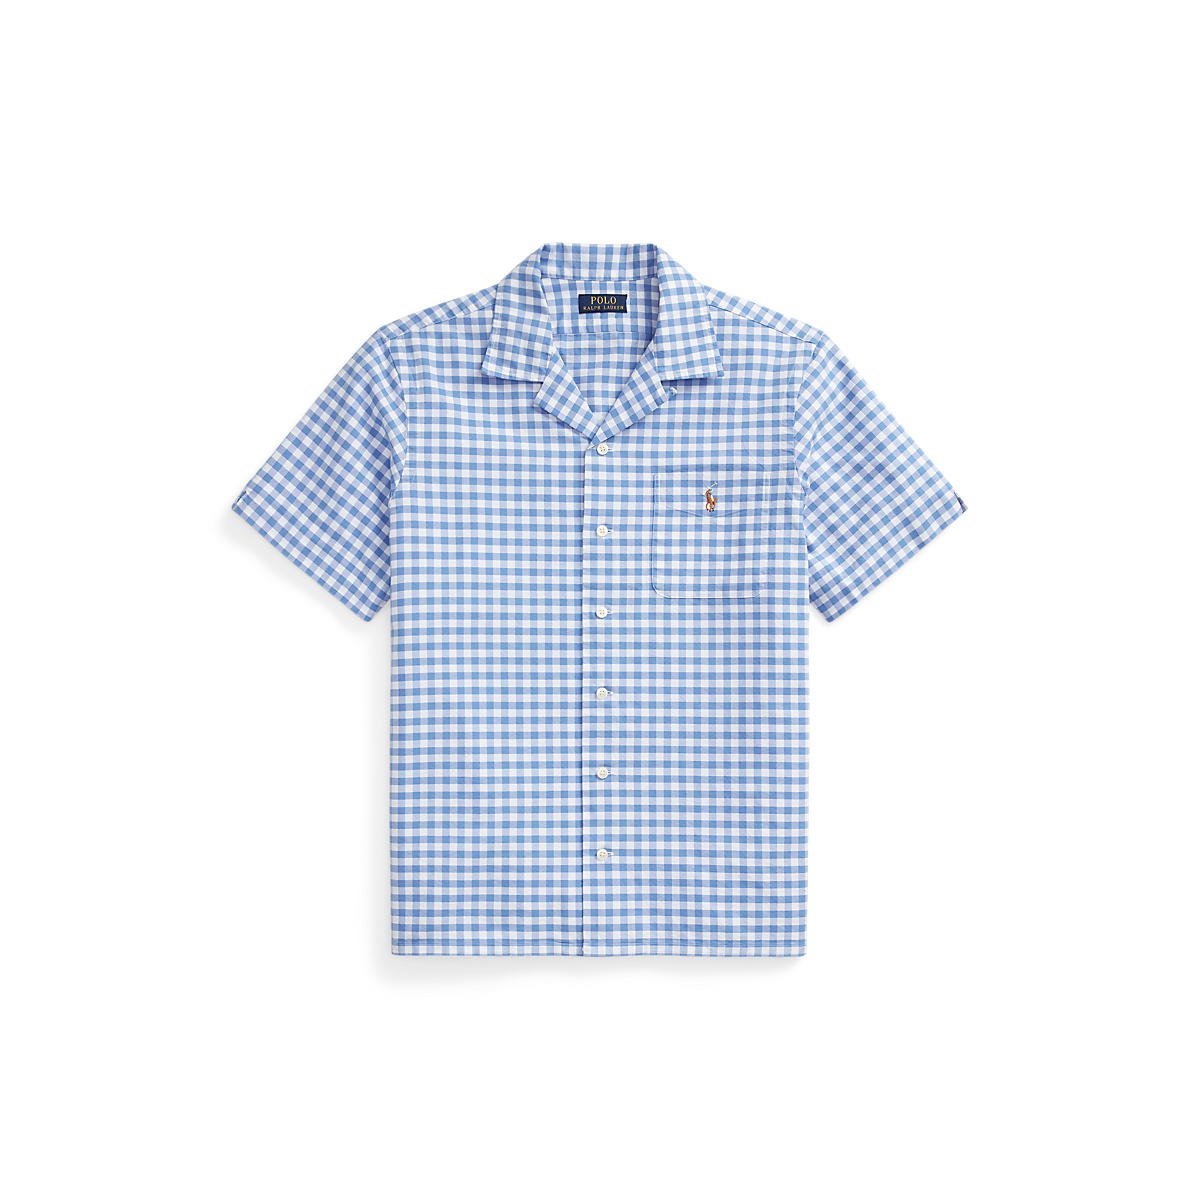 710870302001 Polo Ralph Lauren Classic Fit Gingham Cotton Camp Shirt Blue, P6,685 from P9,950.jpeg